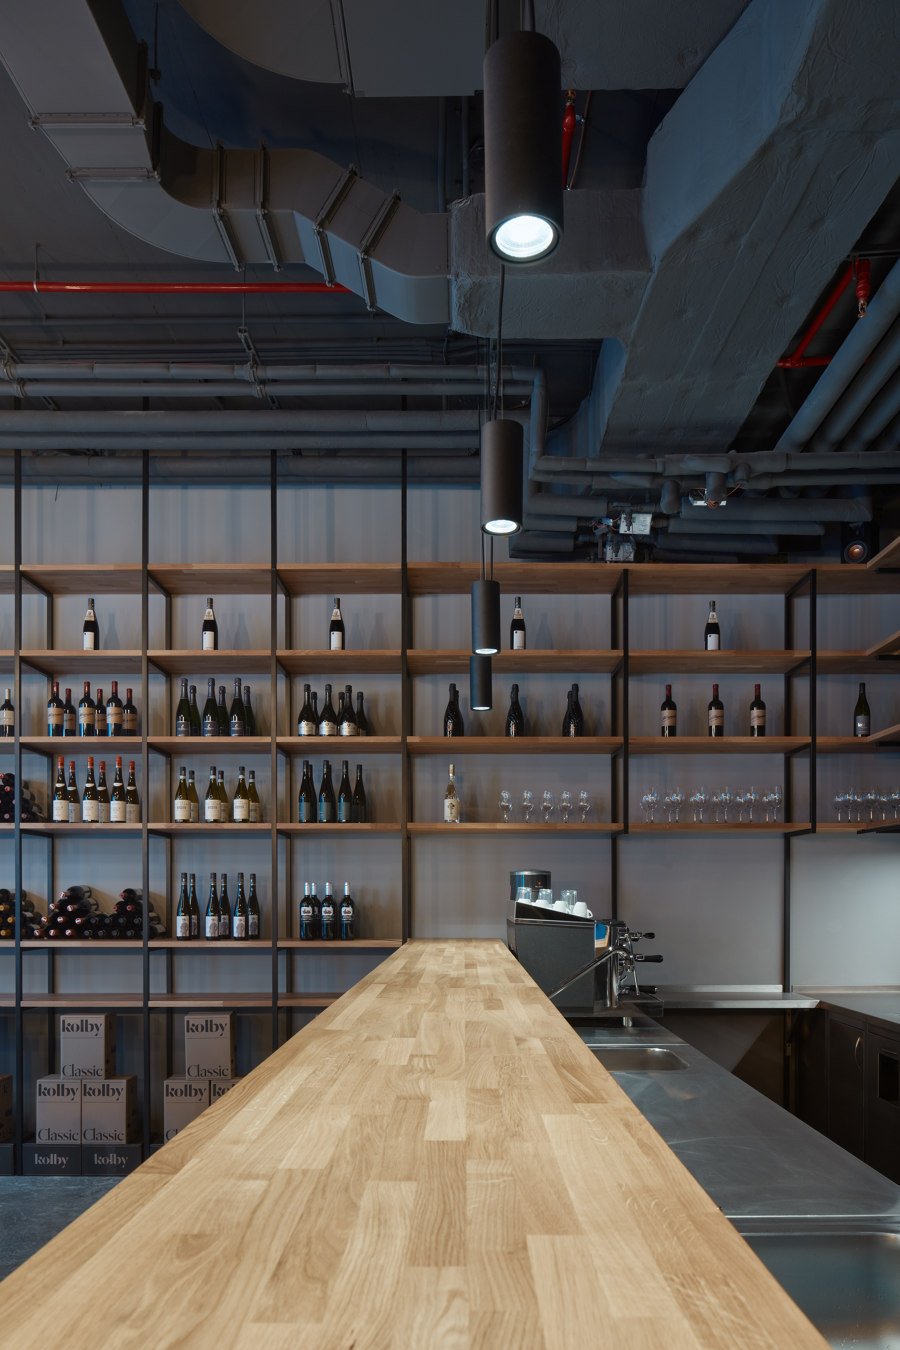 Kolby Wine Bar von CMC Architects | Bar-Interieurs